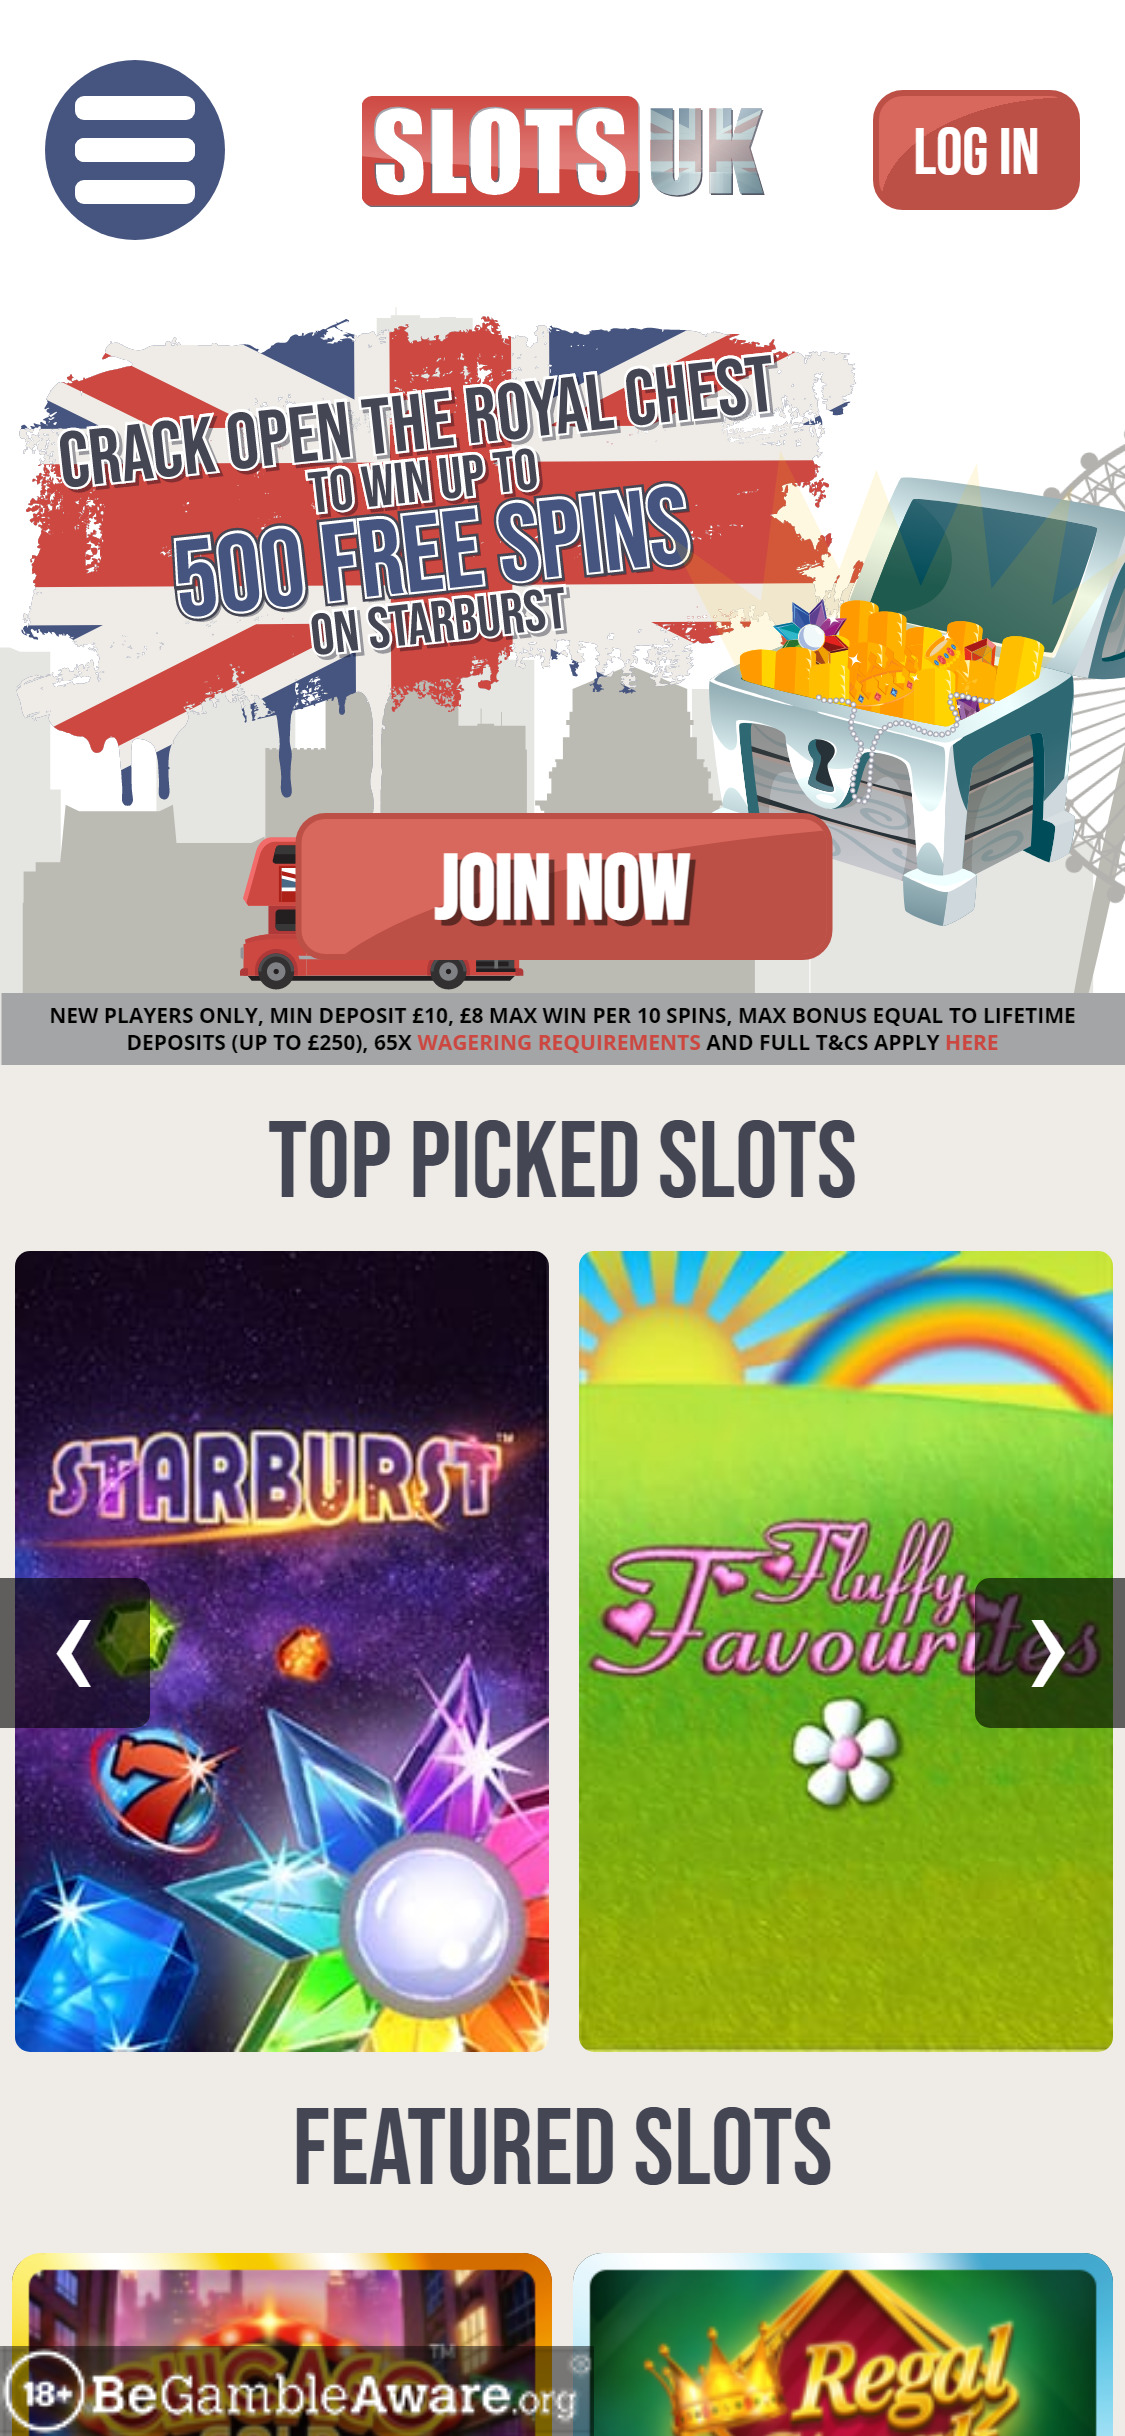 Slots UK Casino Mobile Review